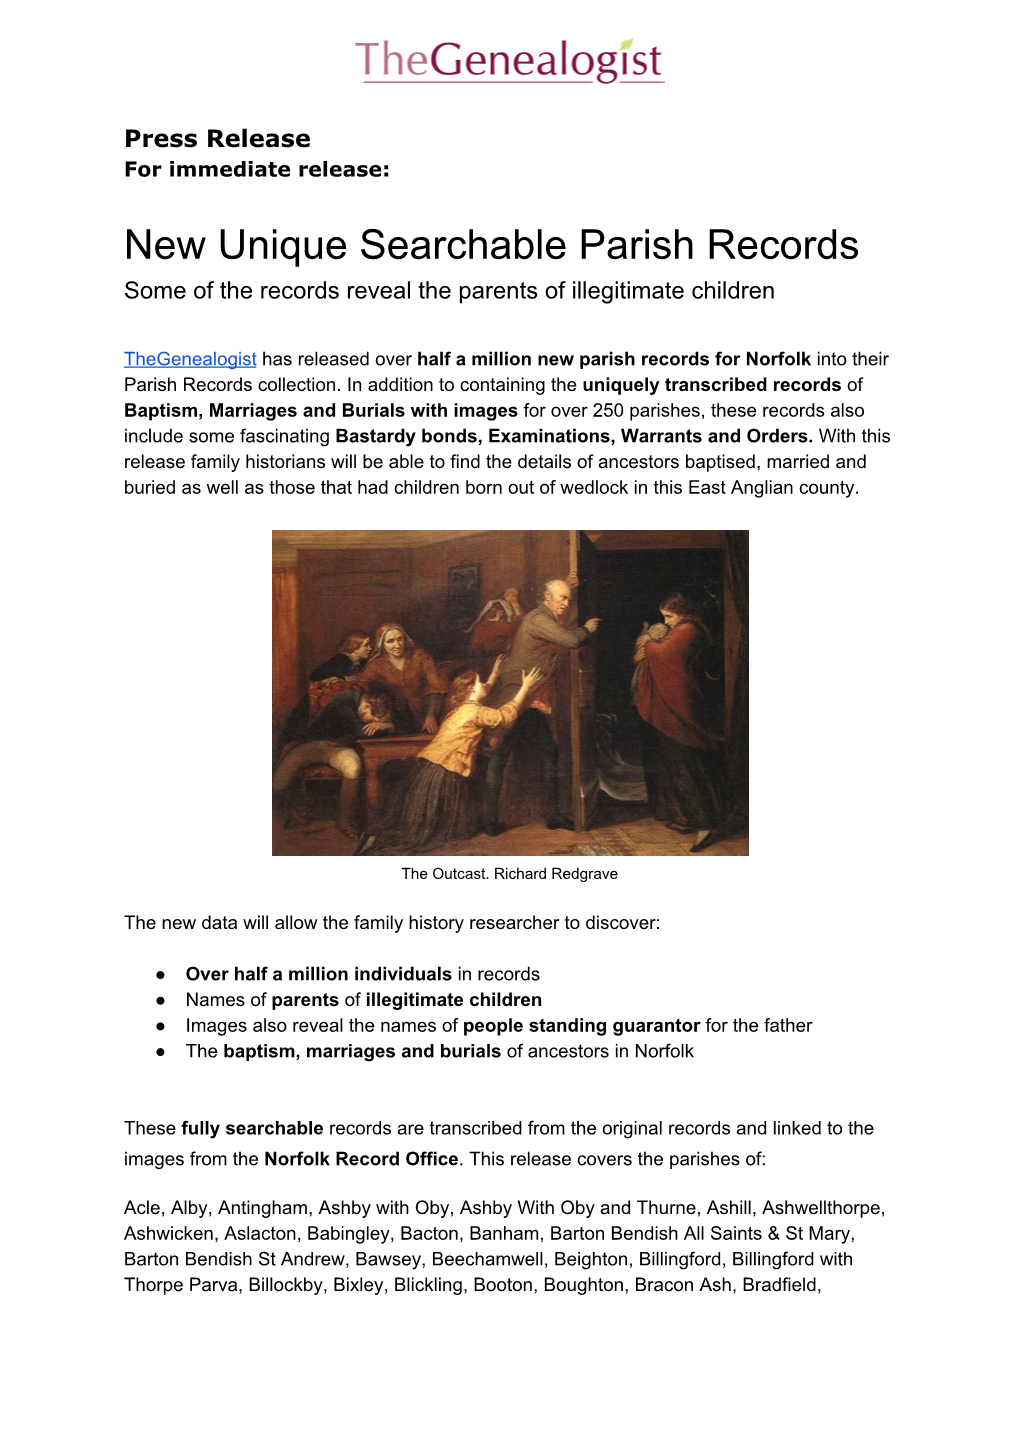 New Unique Searchable Parish Records Some of the Records Reveal the Parents of Illegitimate Children